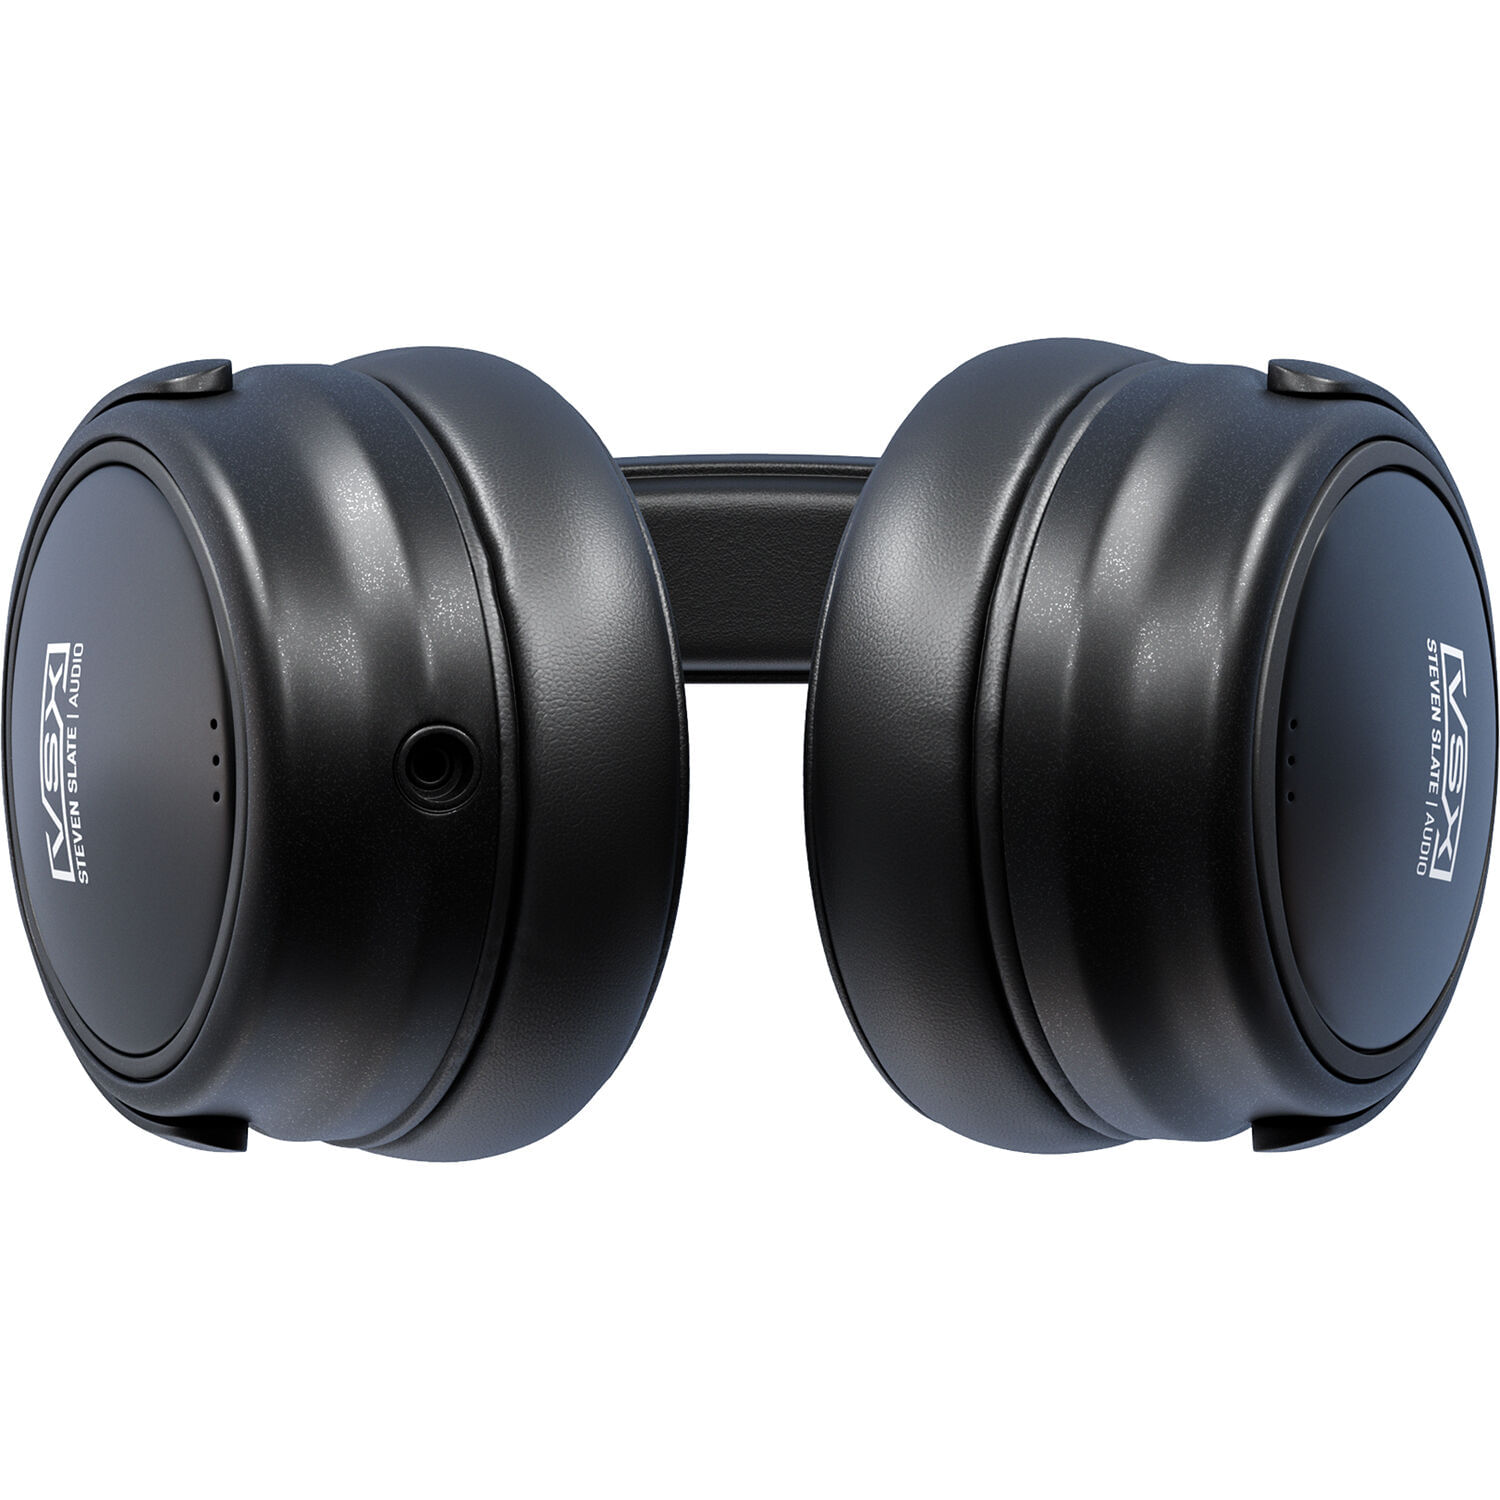 Steven Slate Audio VSX Modelando auriculares con el complemento de monitoreo VSX 2.0